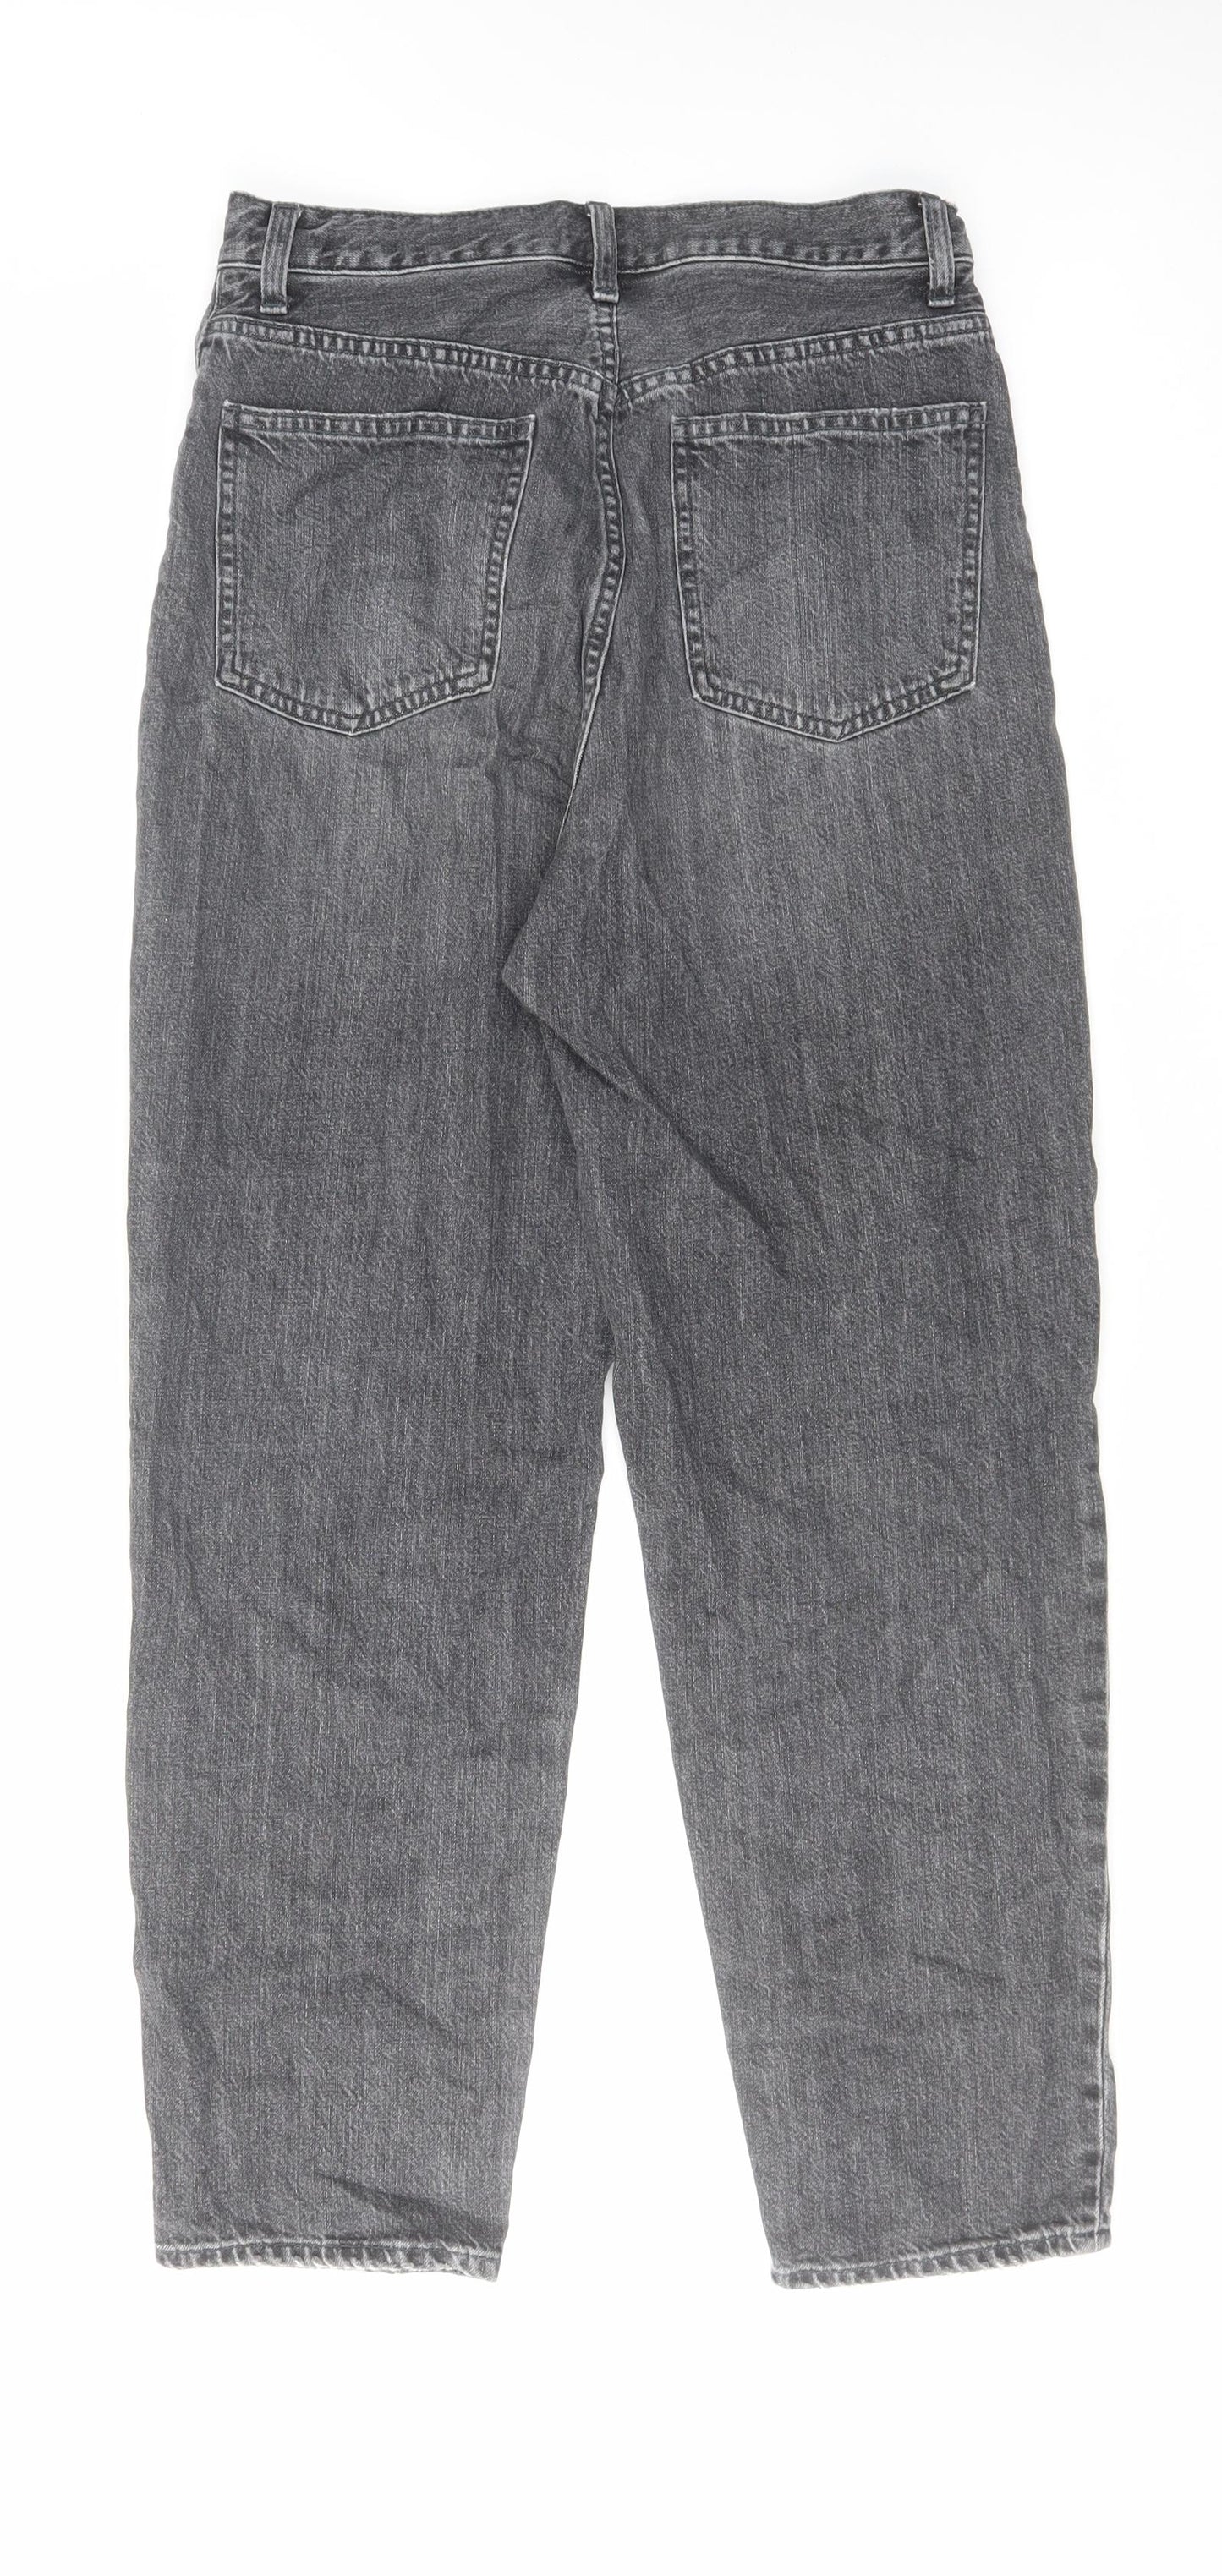 Uniqlo Womens Grey Cotton Mom Jeans Size 27 in L28 in Regular Zip